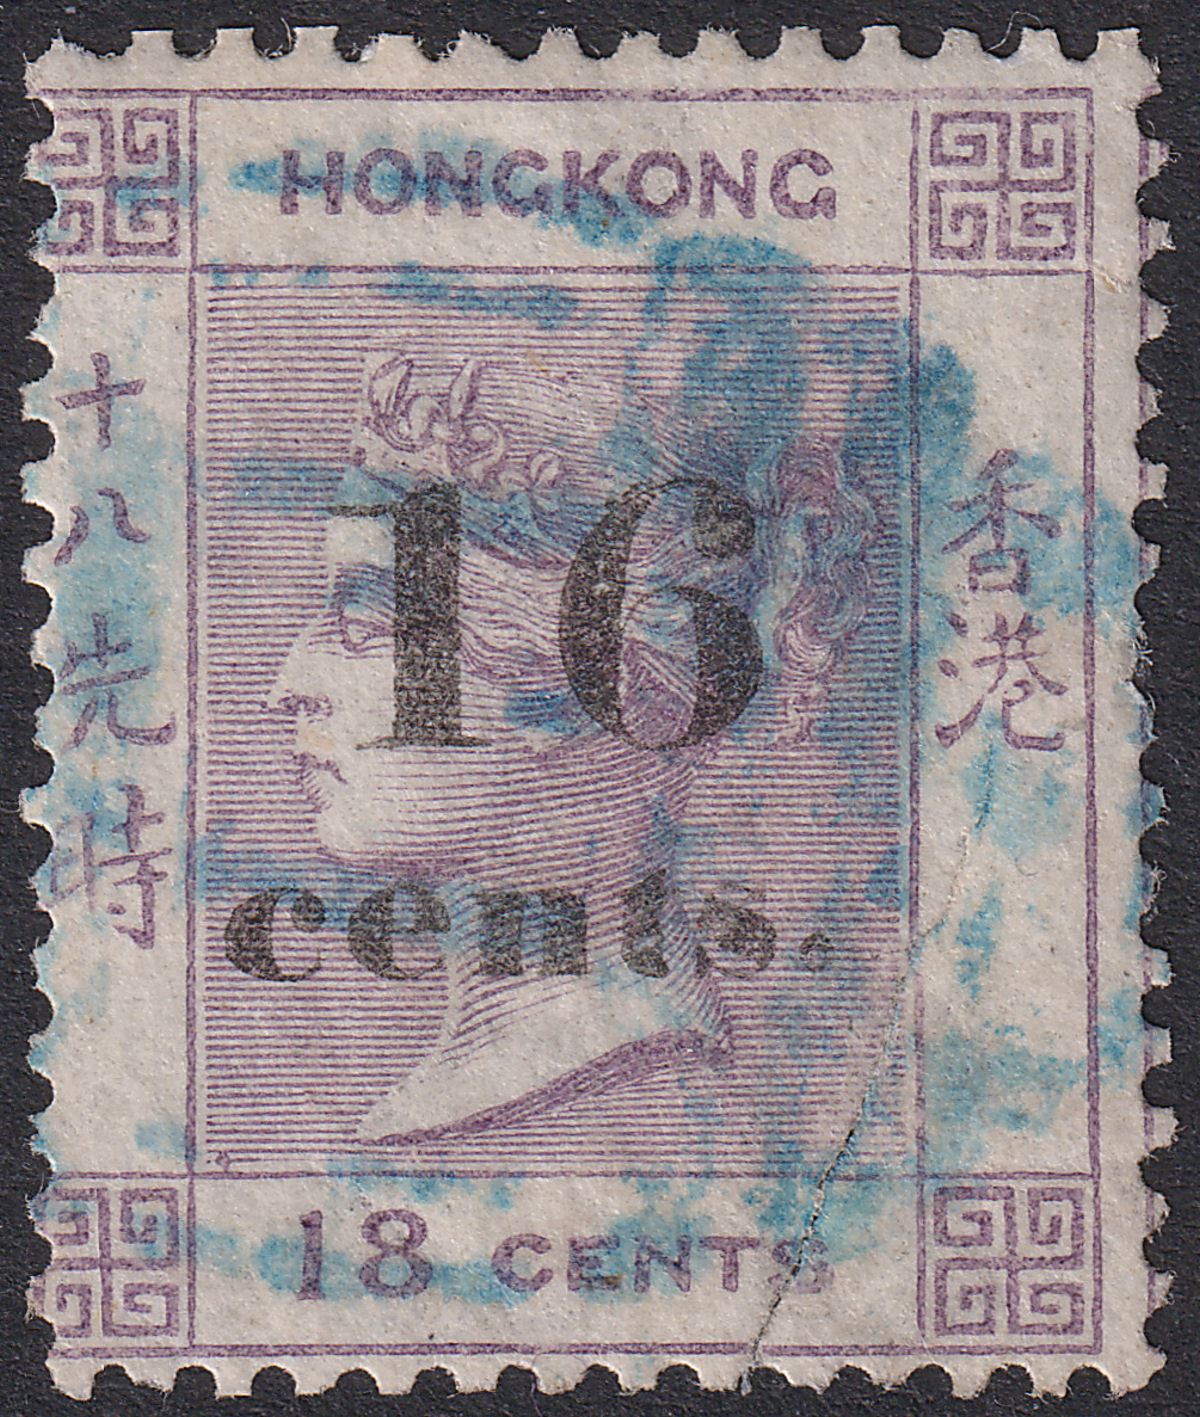 Hong Kong 1876 QV 16c on 18c Used F1 Blue Postmark Foochow SG Z325 c£325 TORN